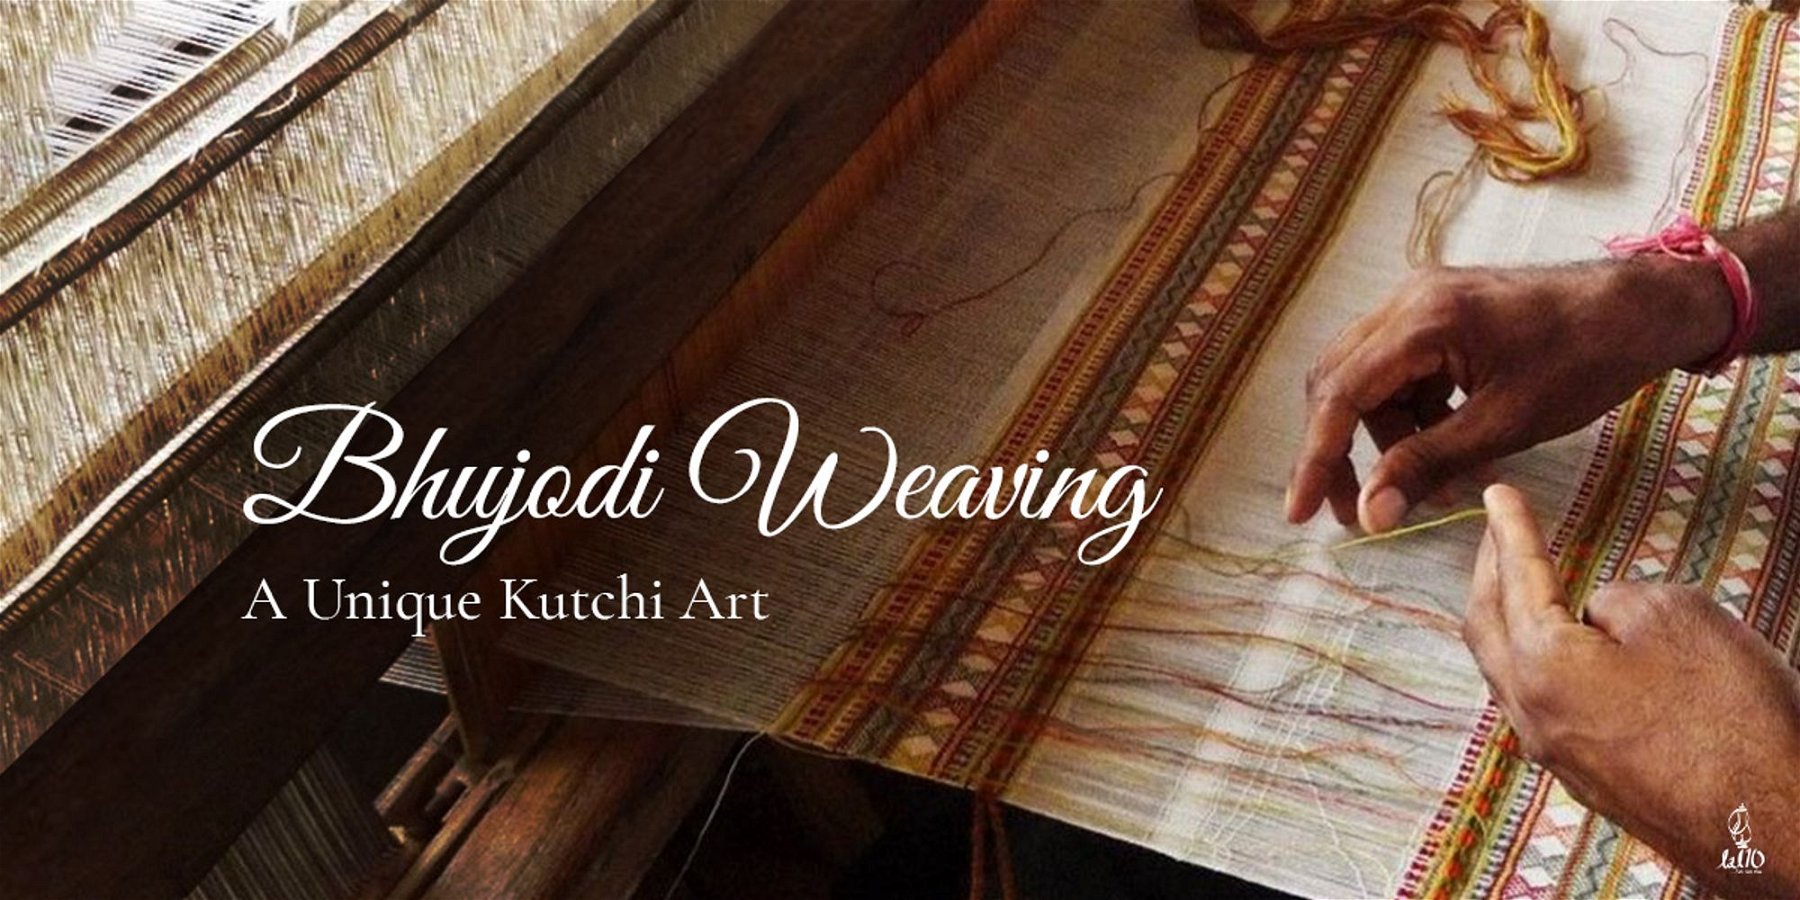 A Unique Kutchi Art

ESS

\ 7 FY

r